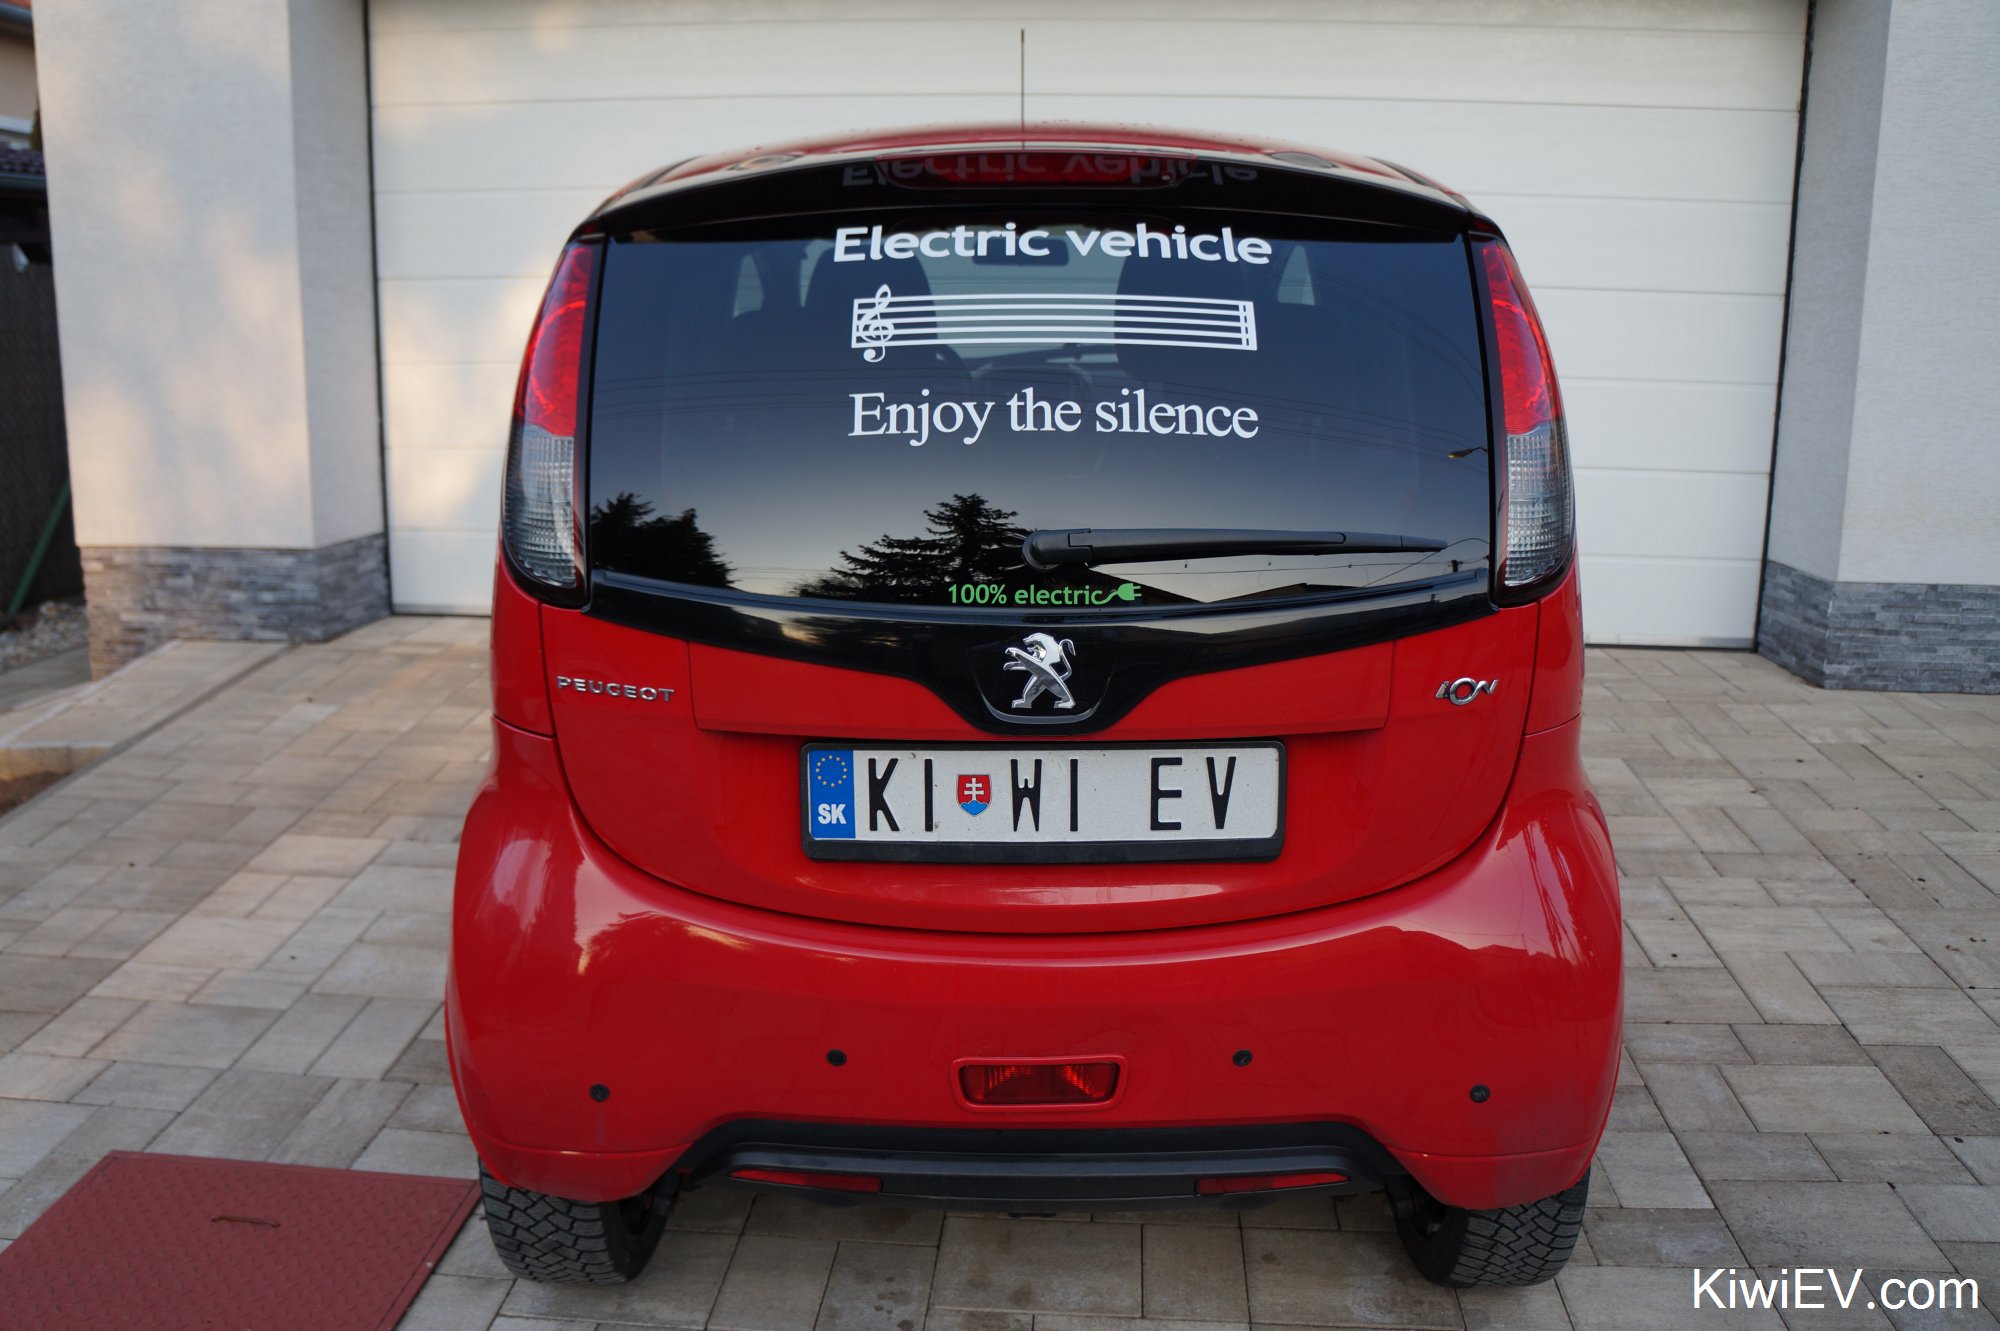 3-Kiwi-EV-electric-car-enjoy-the-silence-sticker.jpg